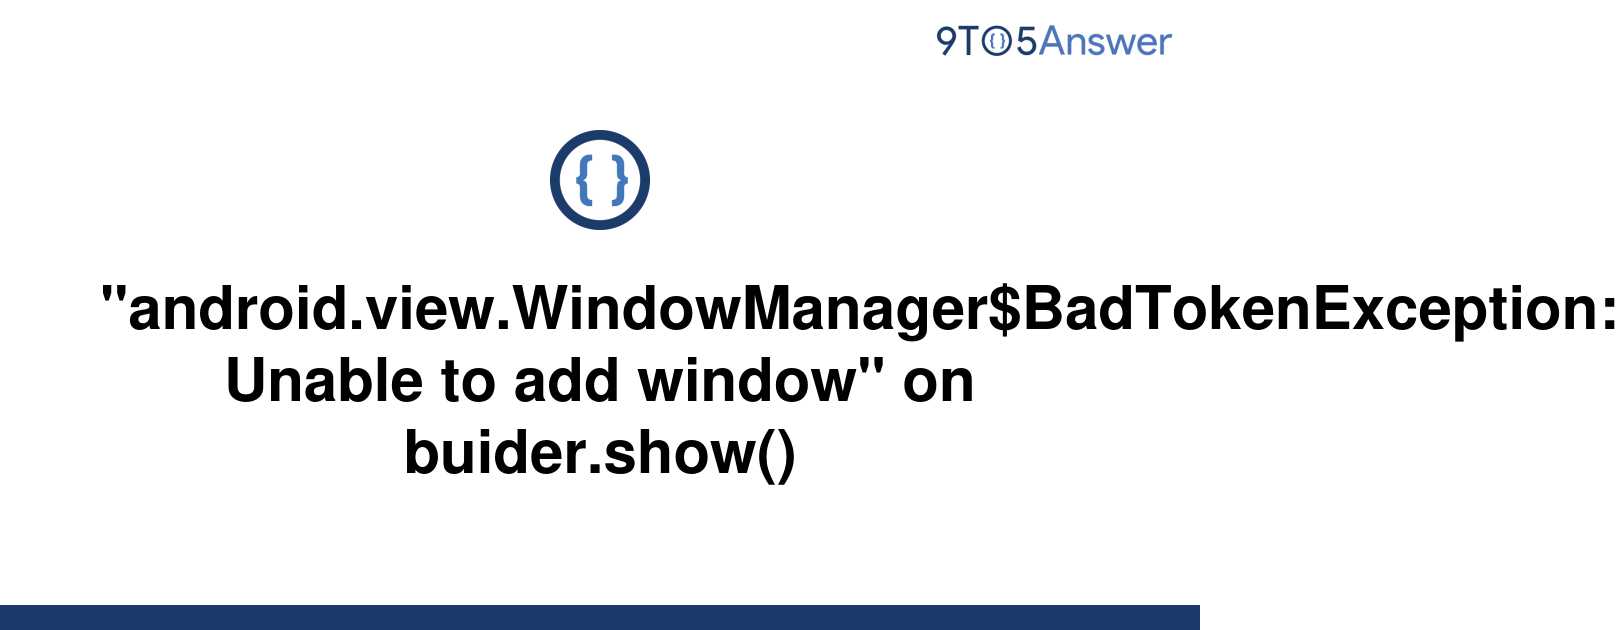 windowmanager$badtokenexception unable to add window